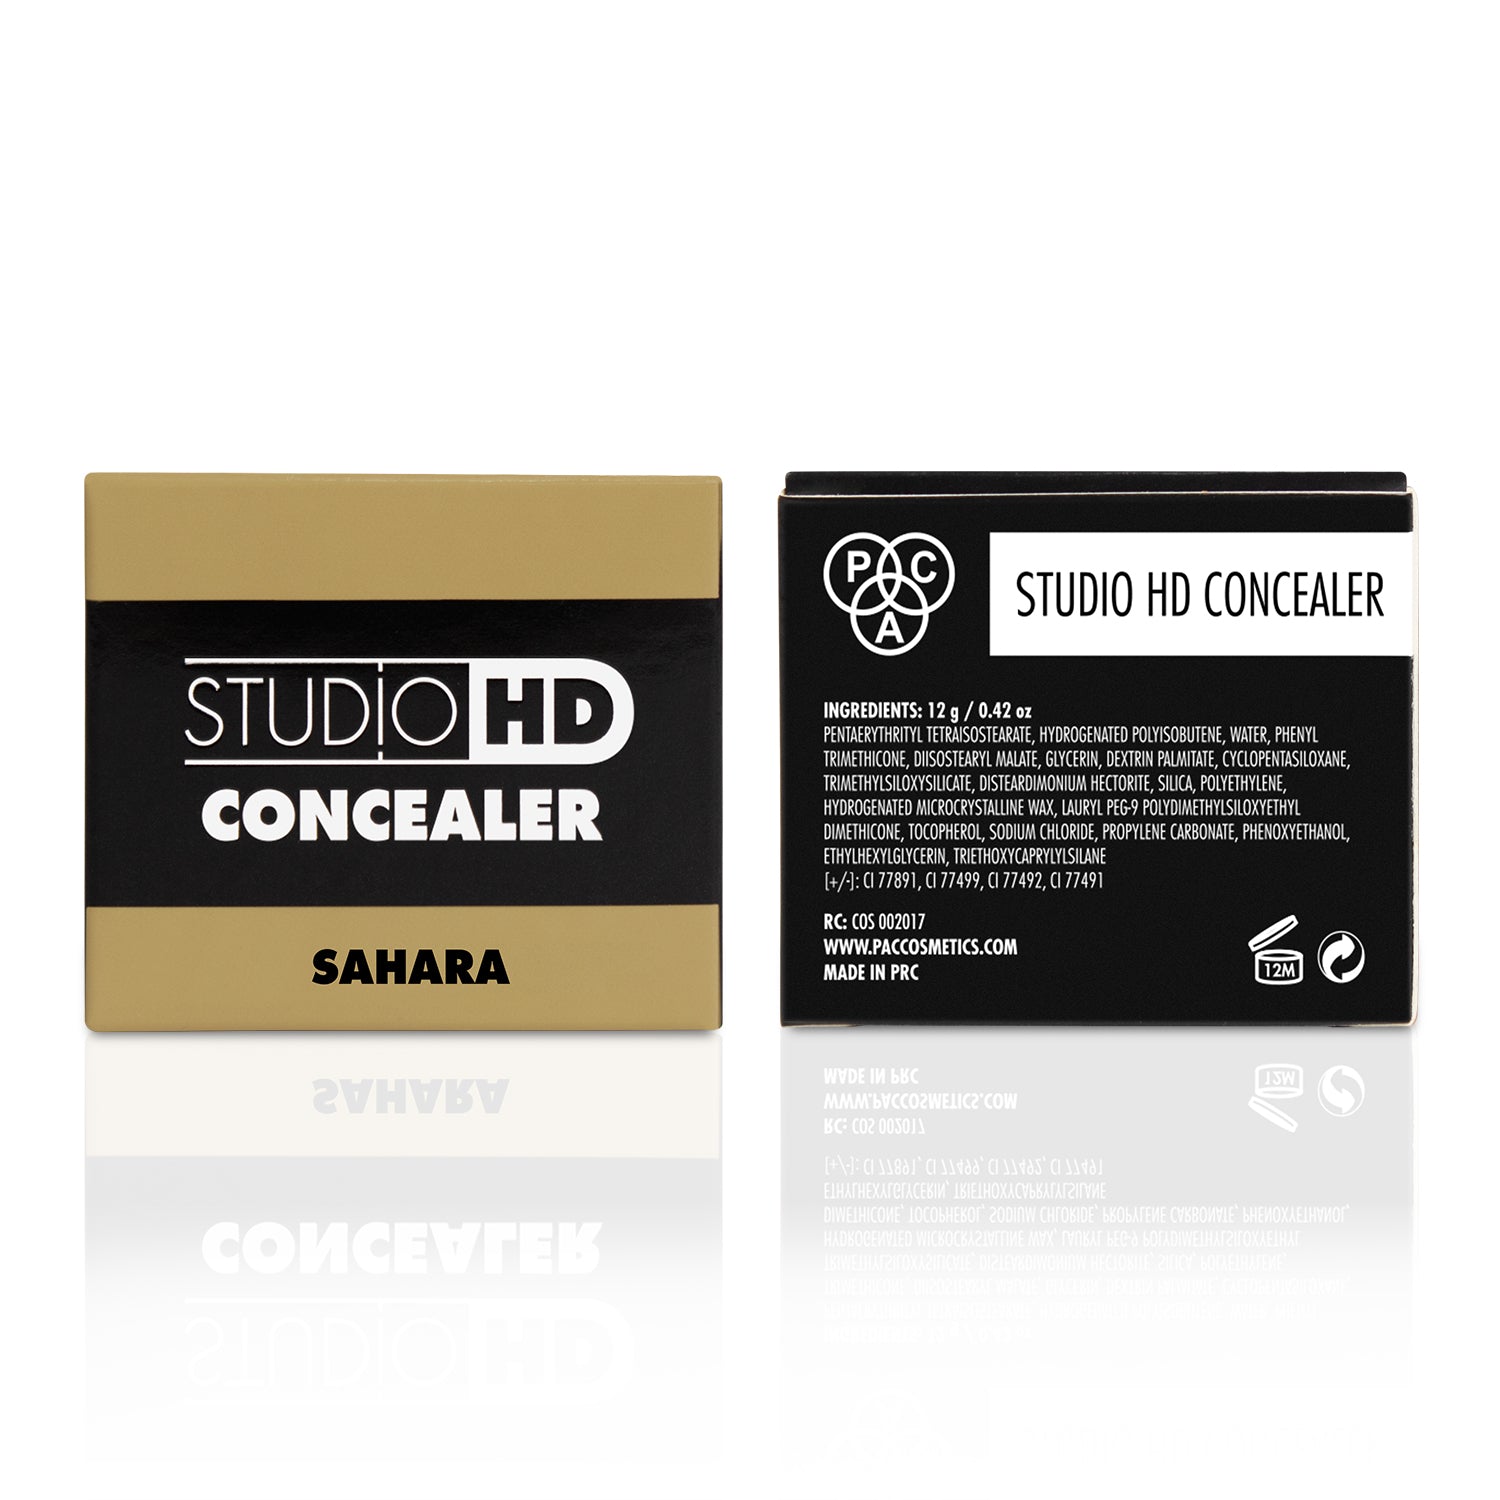 PAC Cosmetics Studio HD Concealer (12 gm) #Color_Sahara